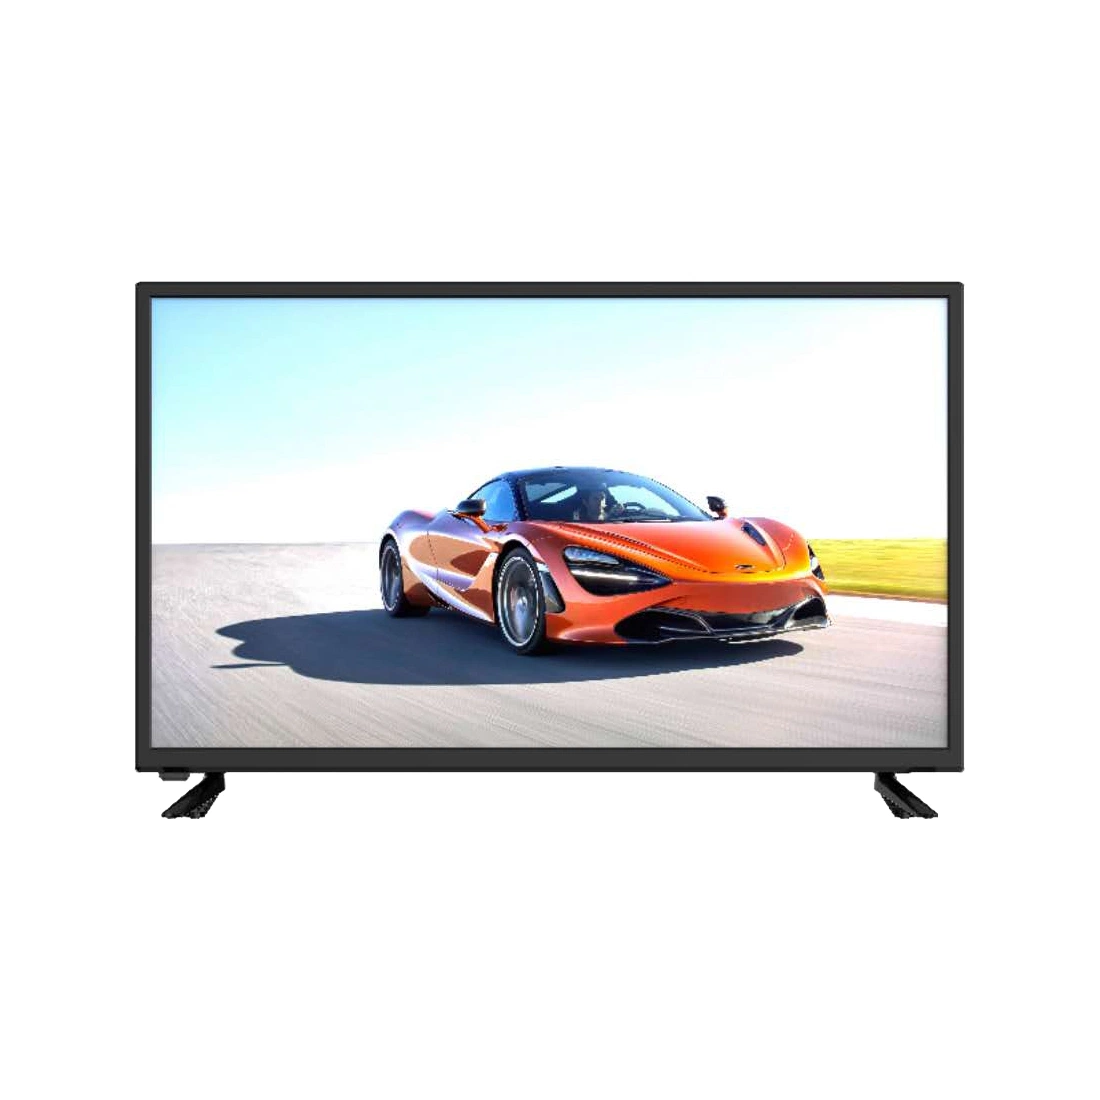 OEM 19 22 24 32 43 بوصة تلفزيون ذكي / DVB T2 S2 تلفزيون بشاشة مسطحة LCD TV Smart LED